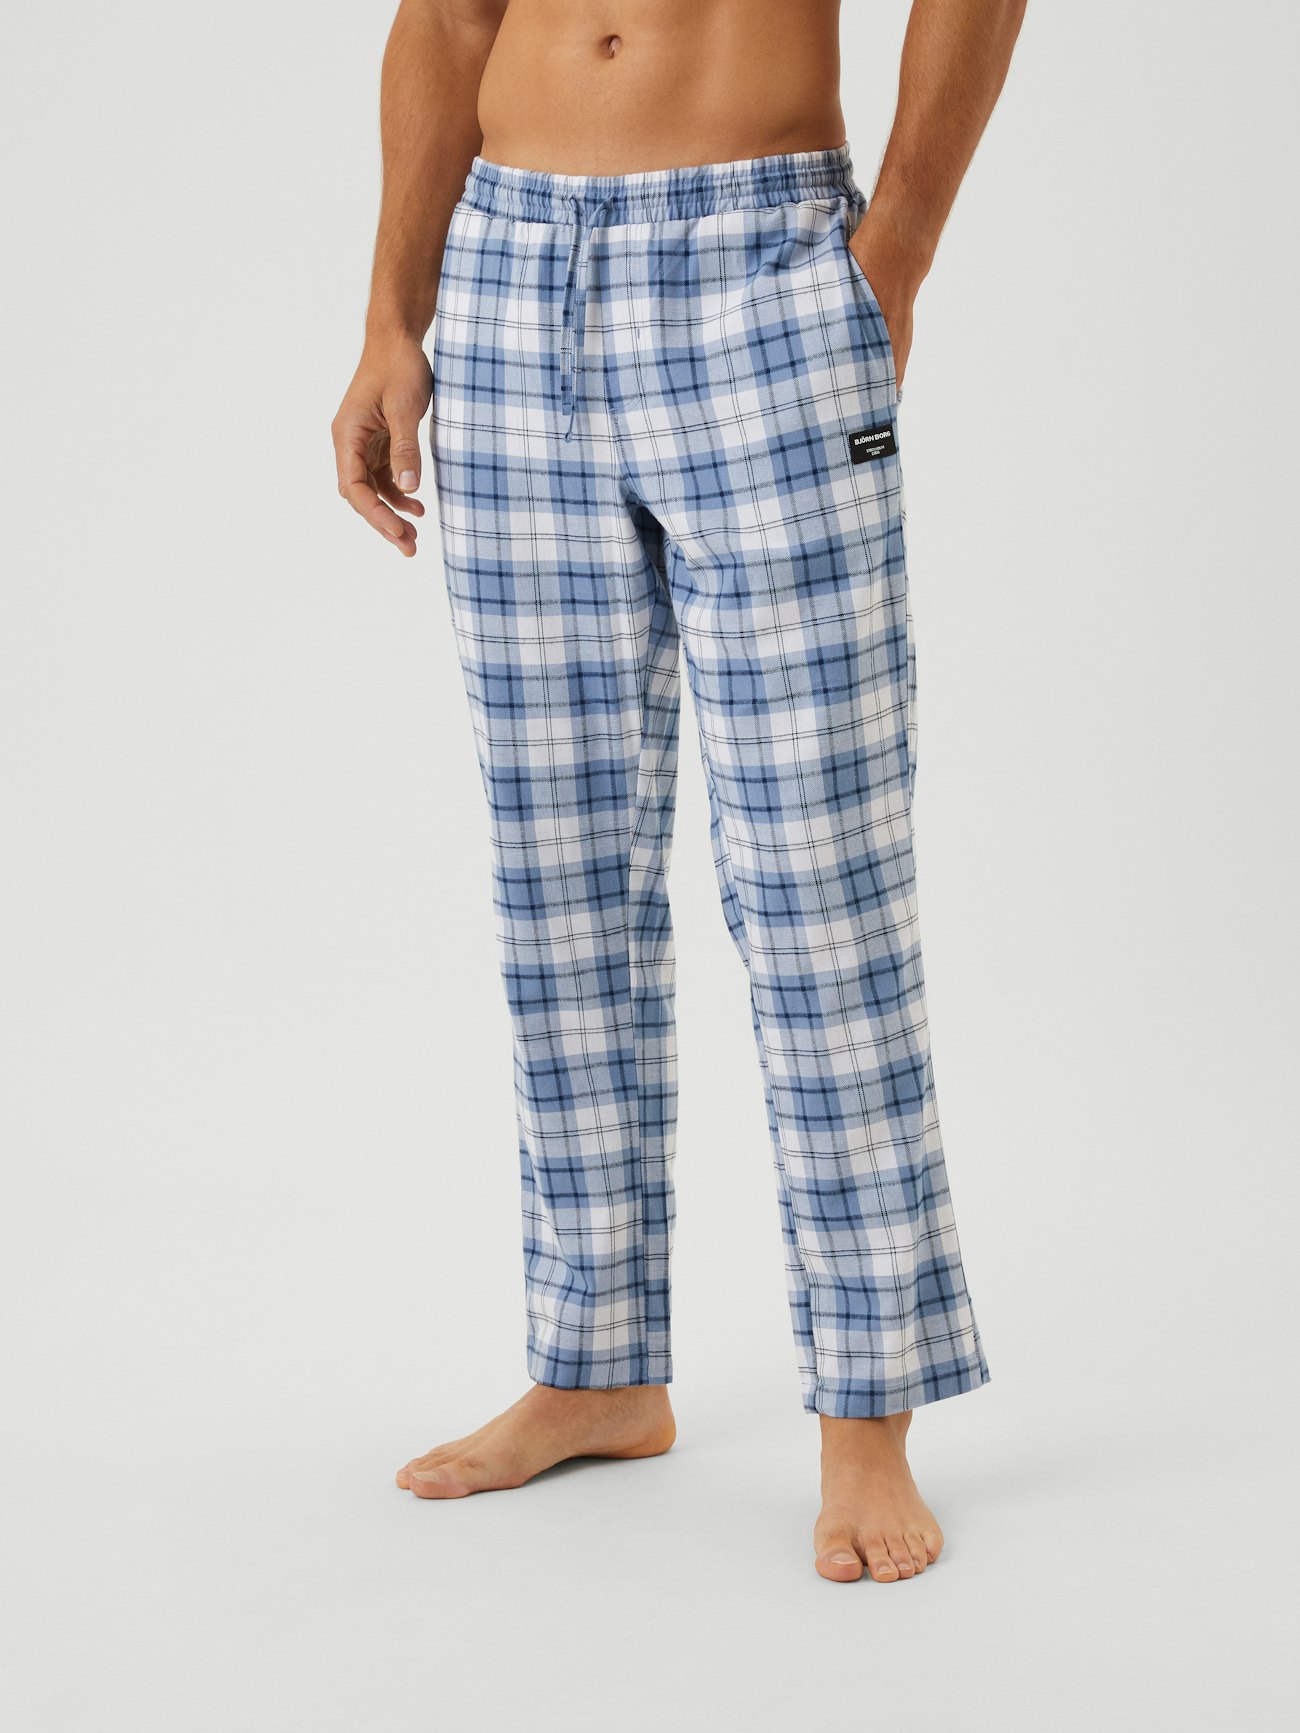 Women's 2-pack Lounge Pants Comfortable Pajama Pants Plaid Pajama P